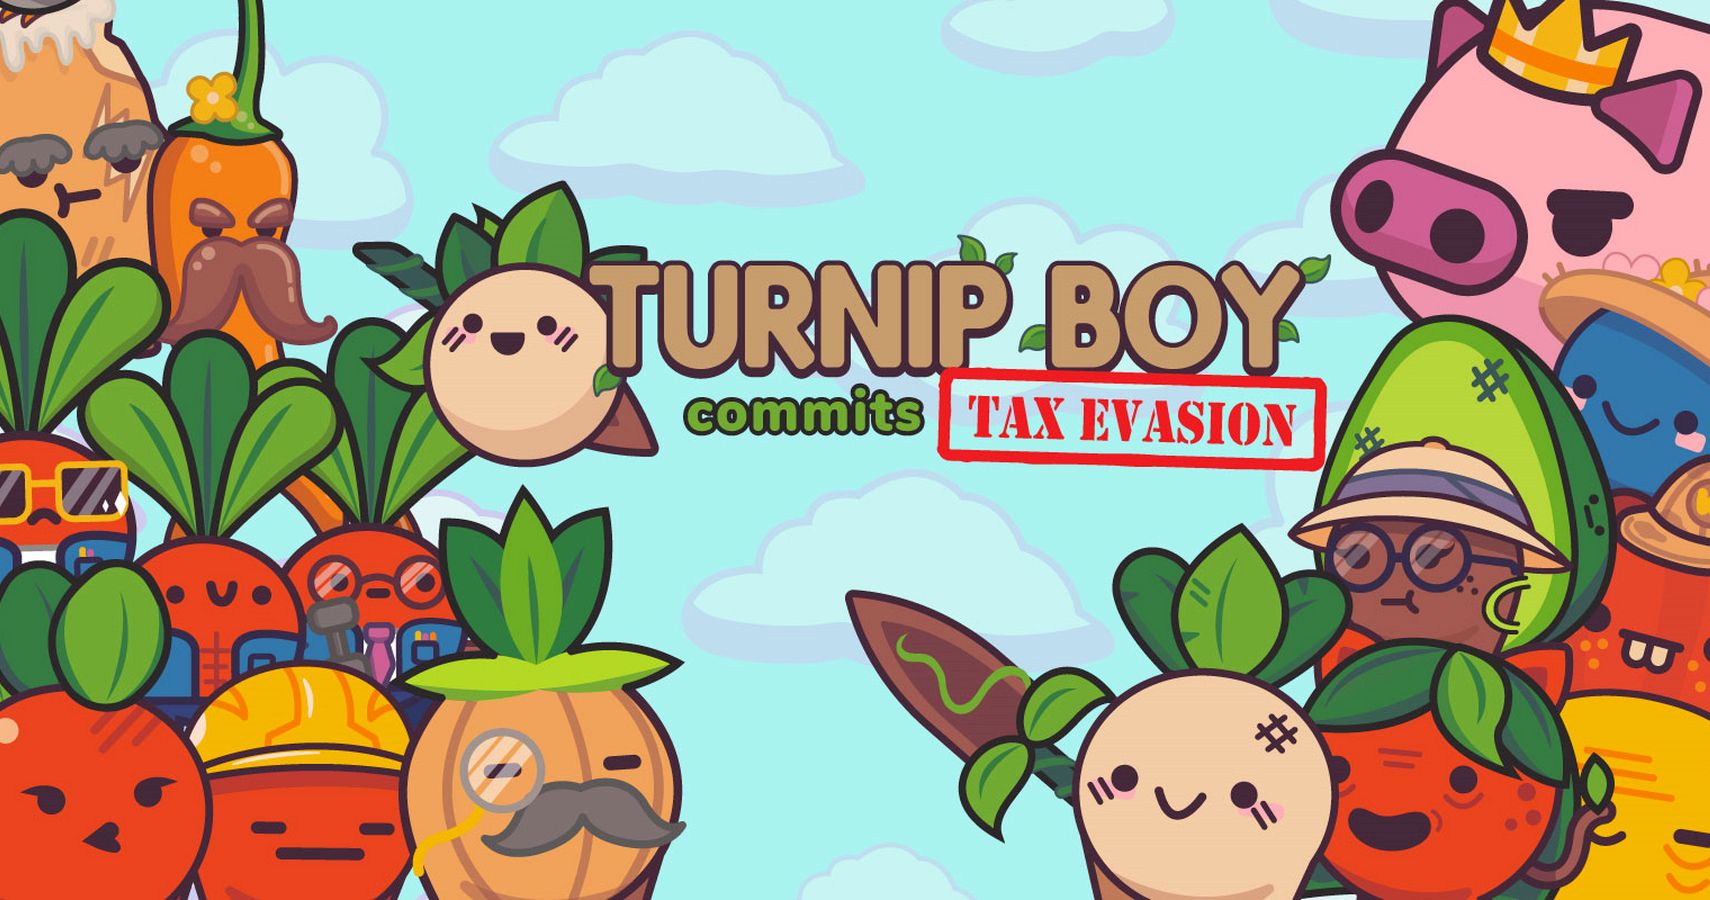 turnip boy commits tax evasion switch